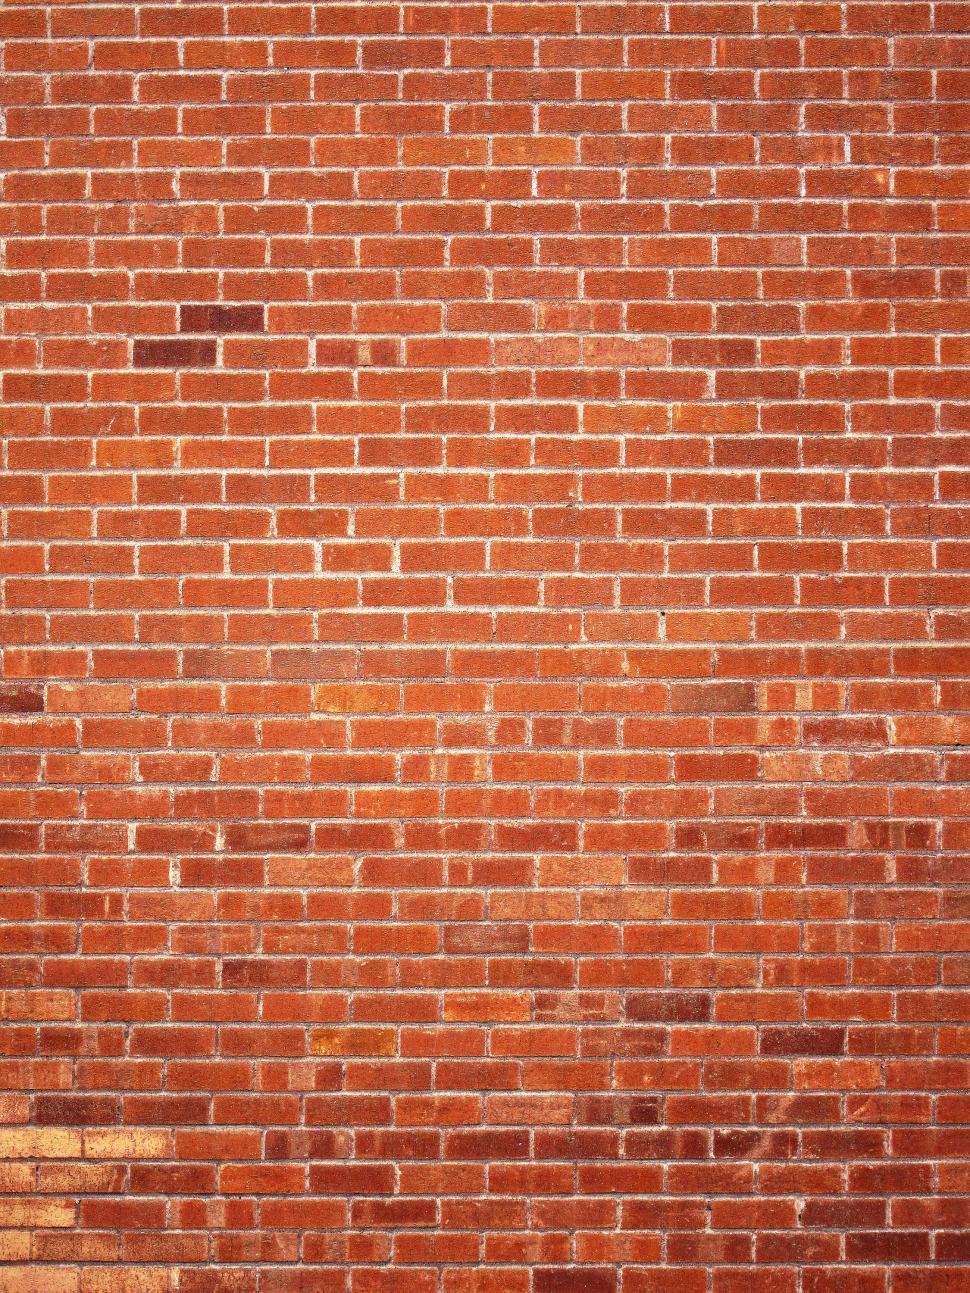 Free Image of Red Brick Wall 